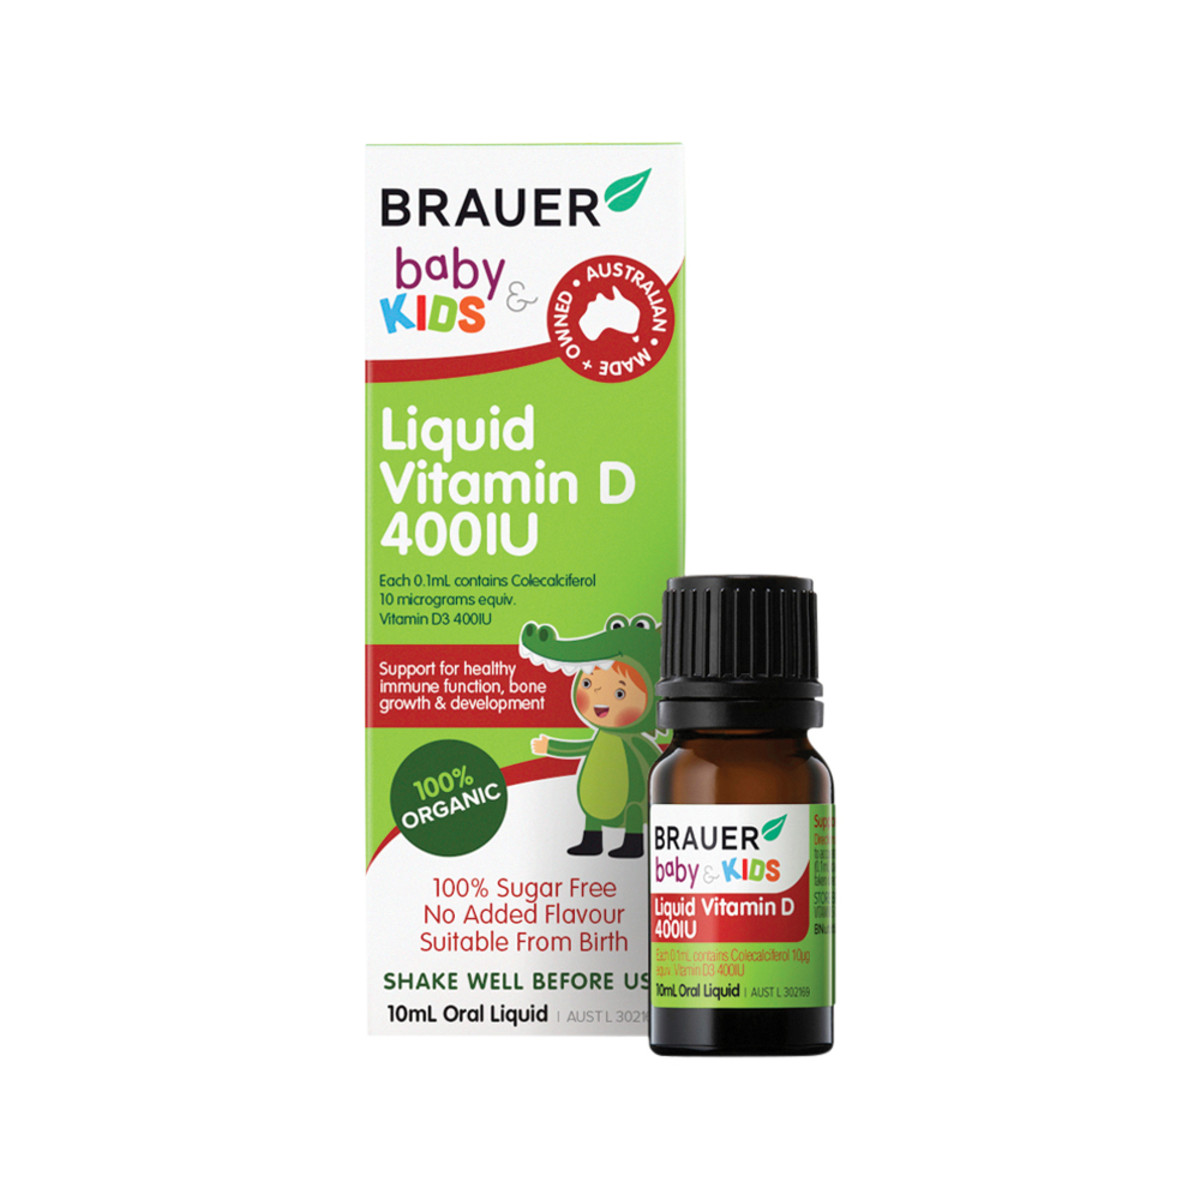 Brauer Baby & Kids Liquid Vitamin D 400IU Oral Liquid 10ml